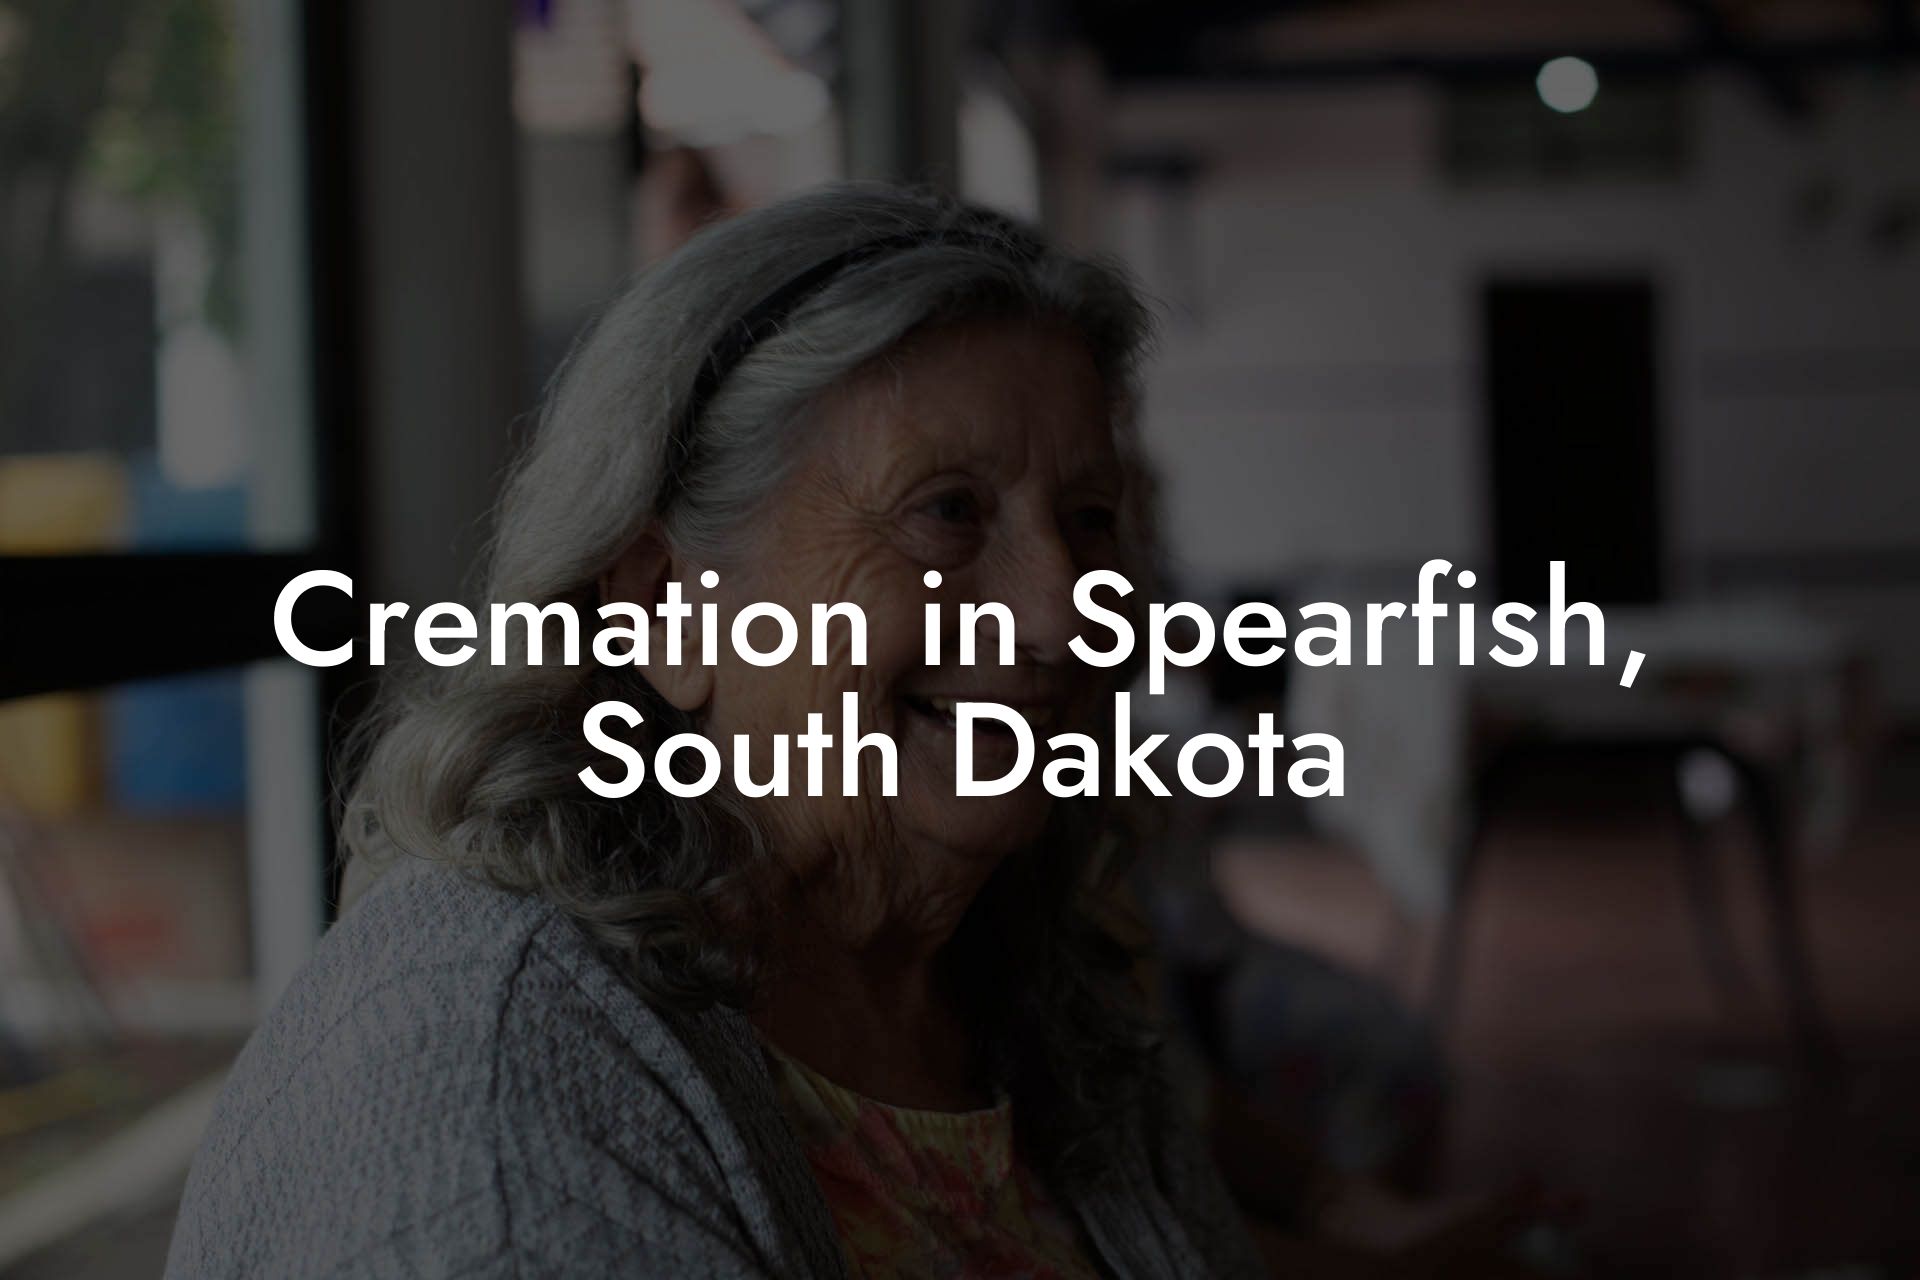 Cremation in Spearfish, South Dakota